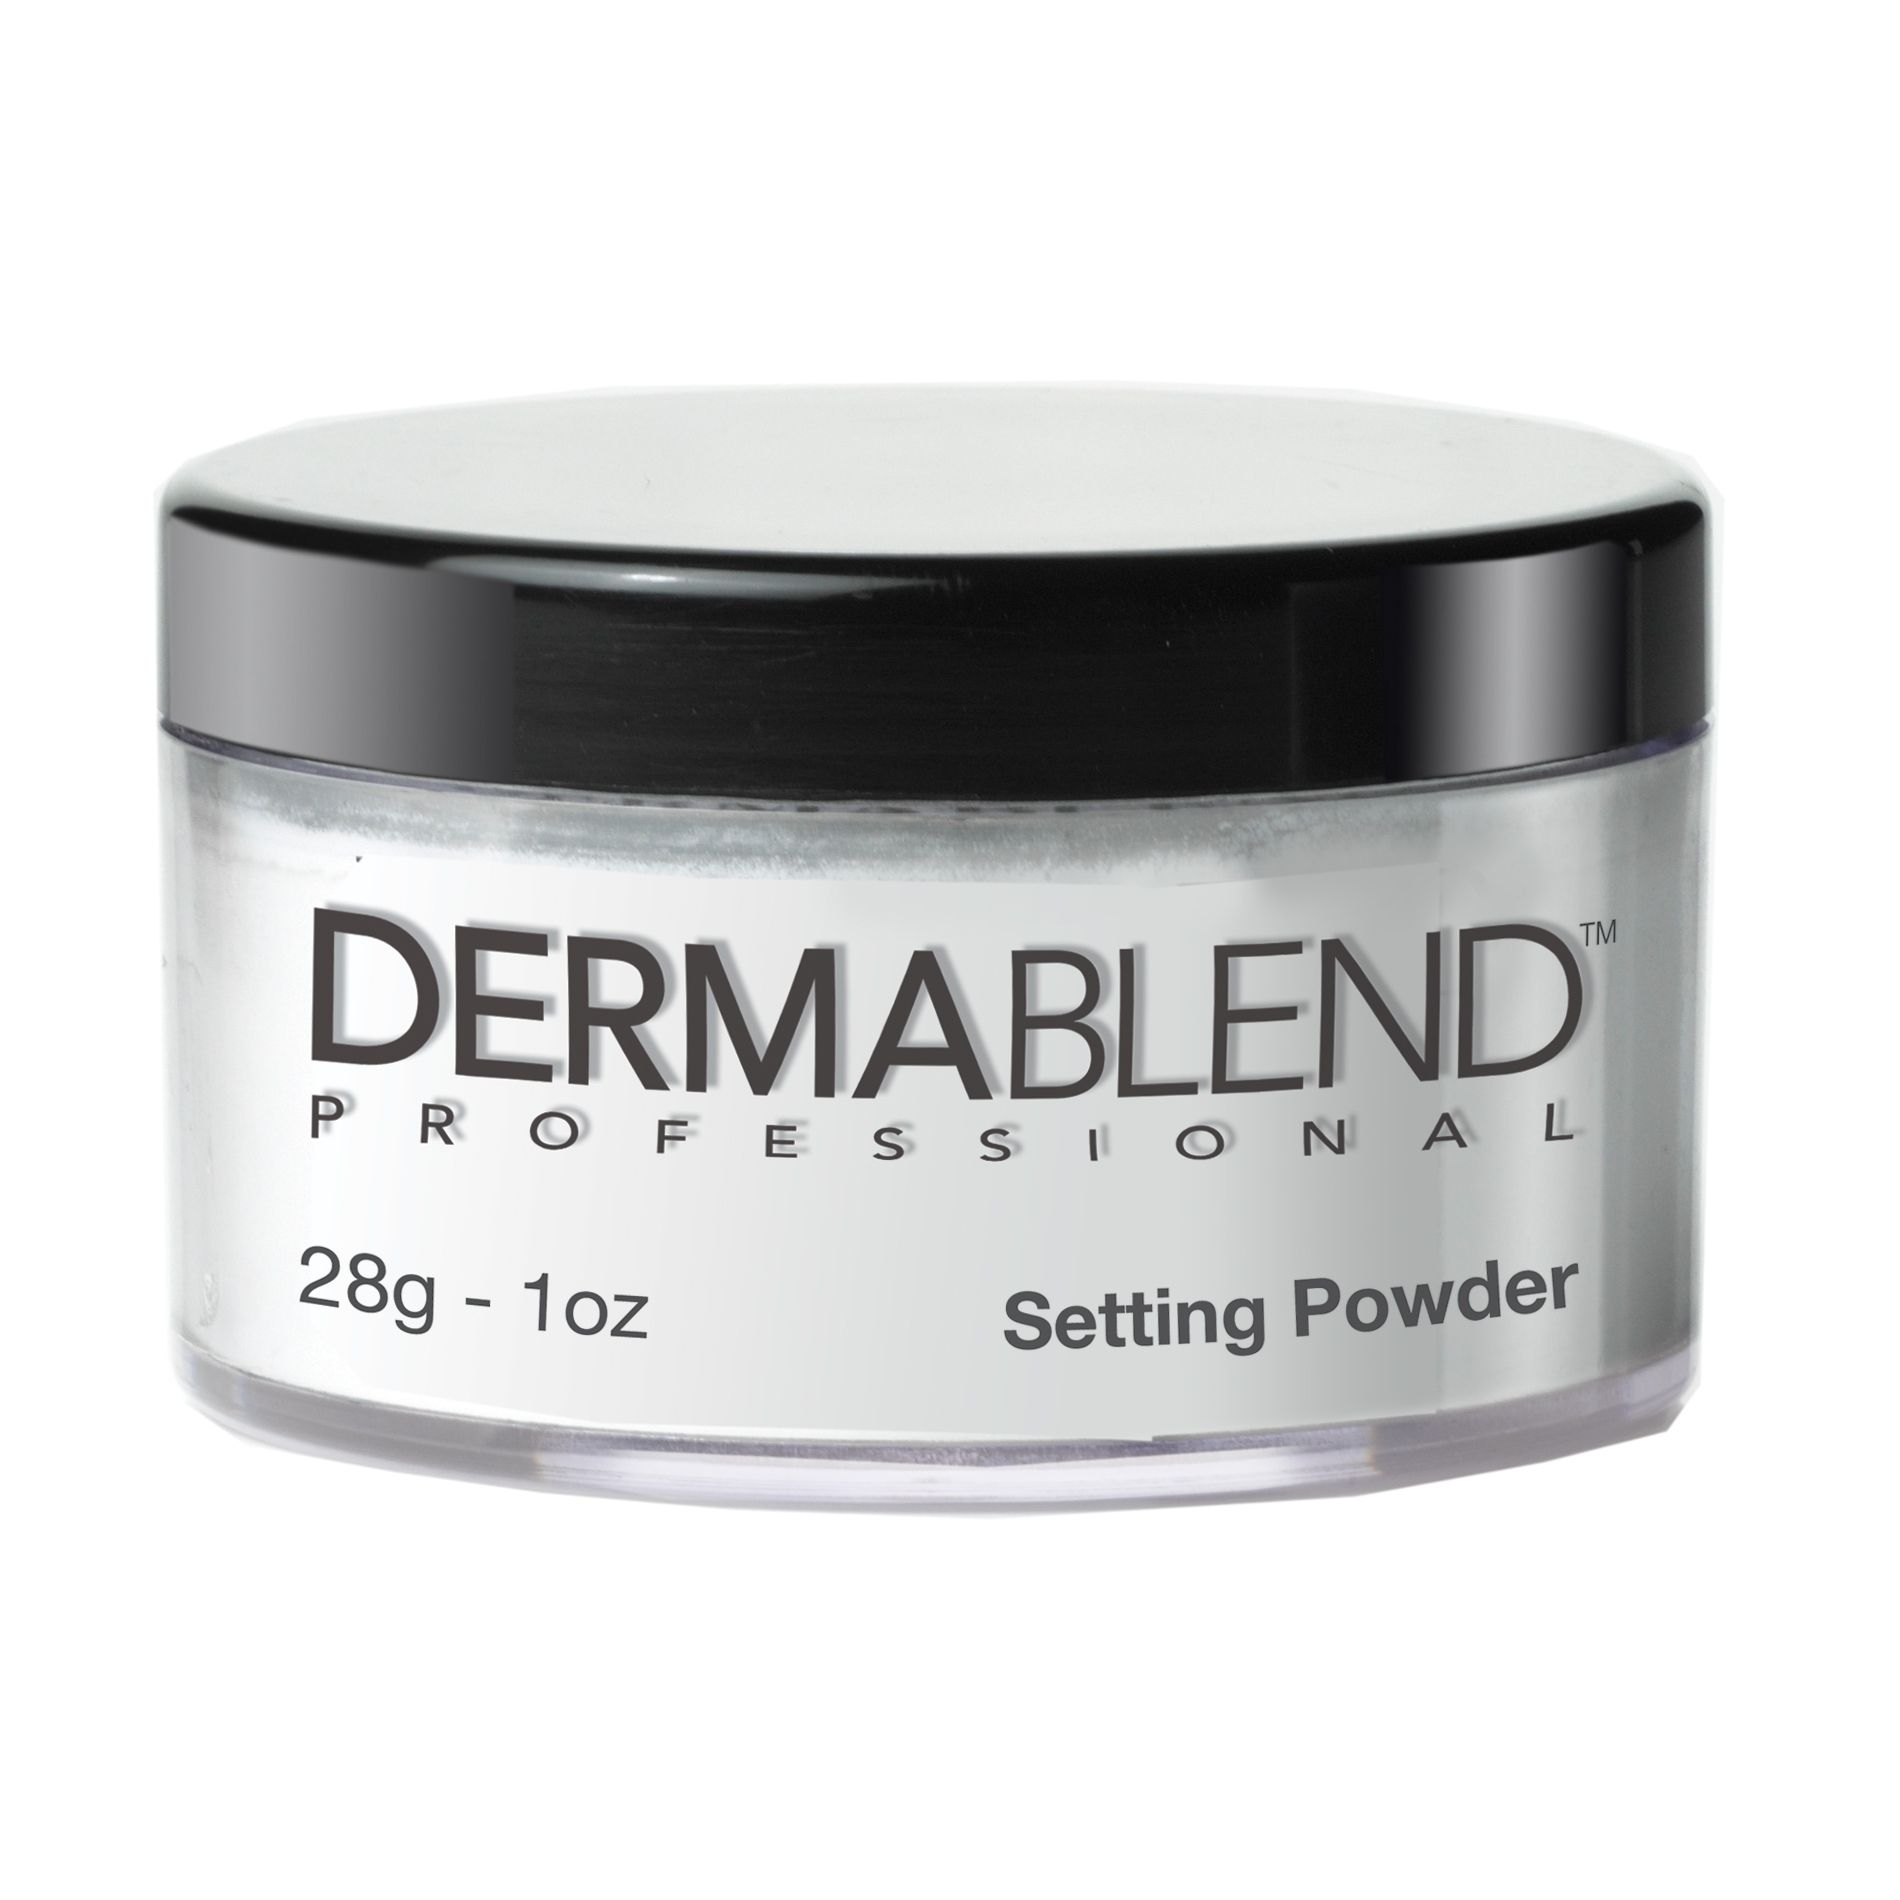 Dermablend Professional Setting Powder, 1 oz.